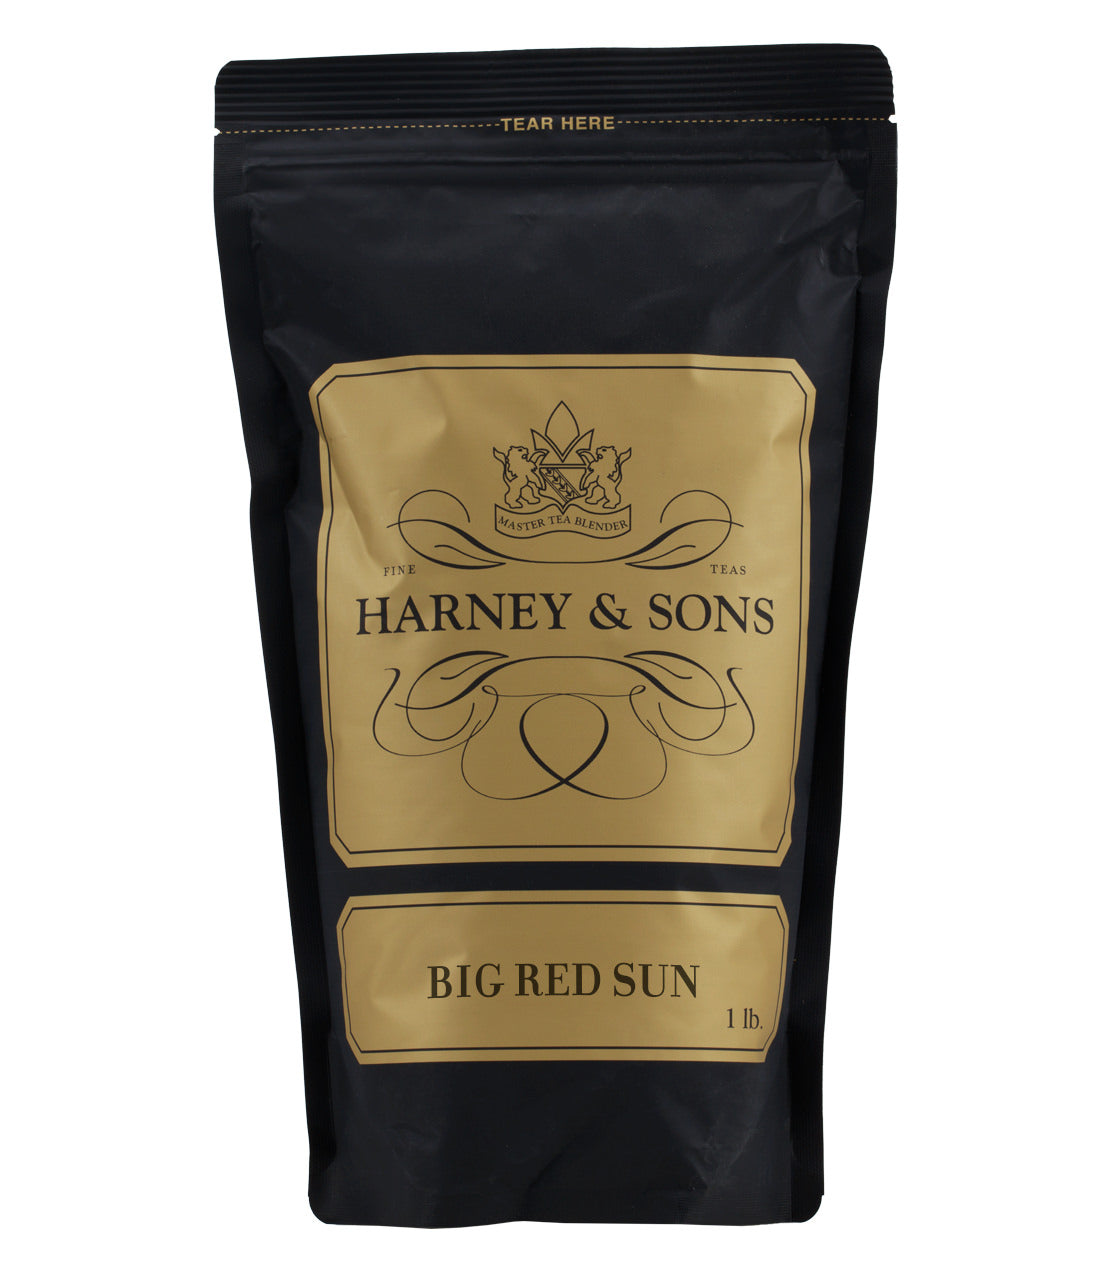 Big Red Sun - Loose 1 lb. Bag - Harney & Sons Fine Teas